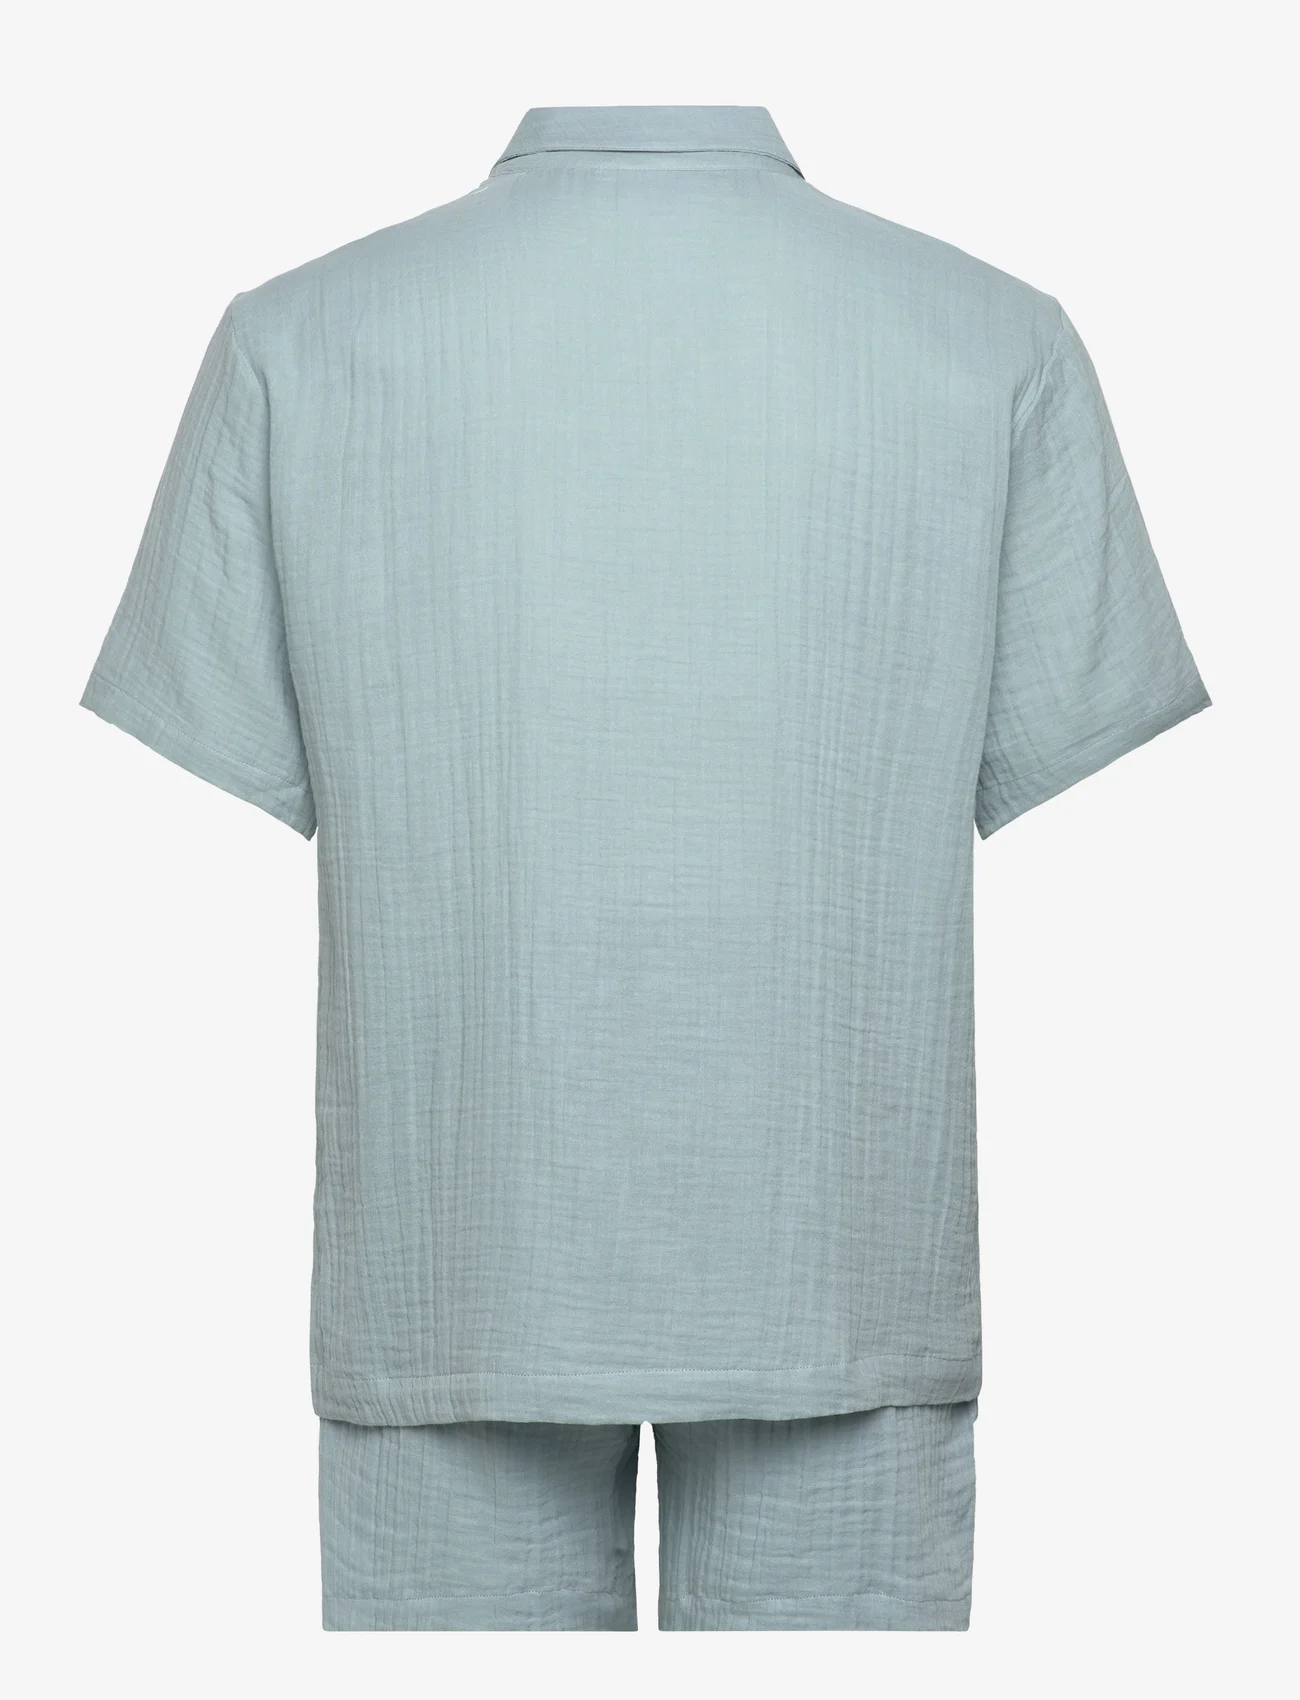 Calvin Klein - S/S SHORT SET - pyjamas - arona - 1